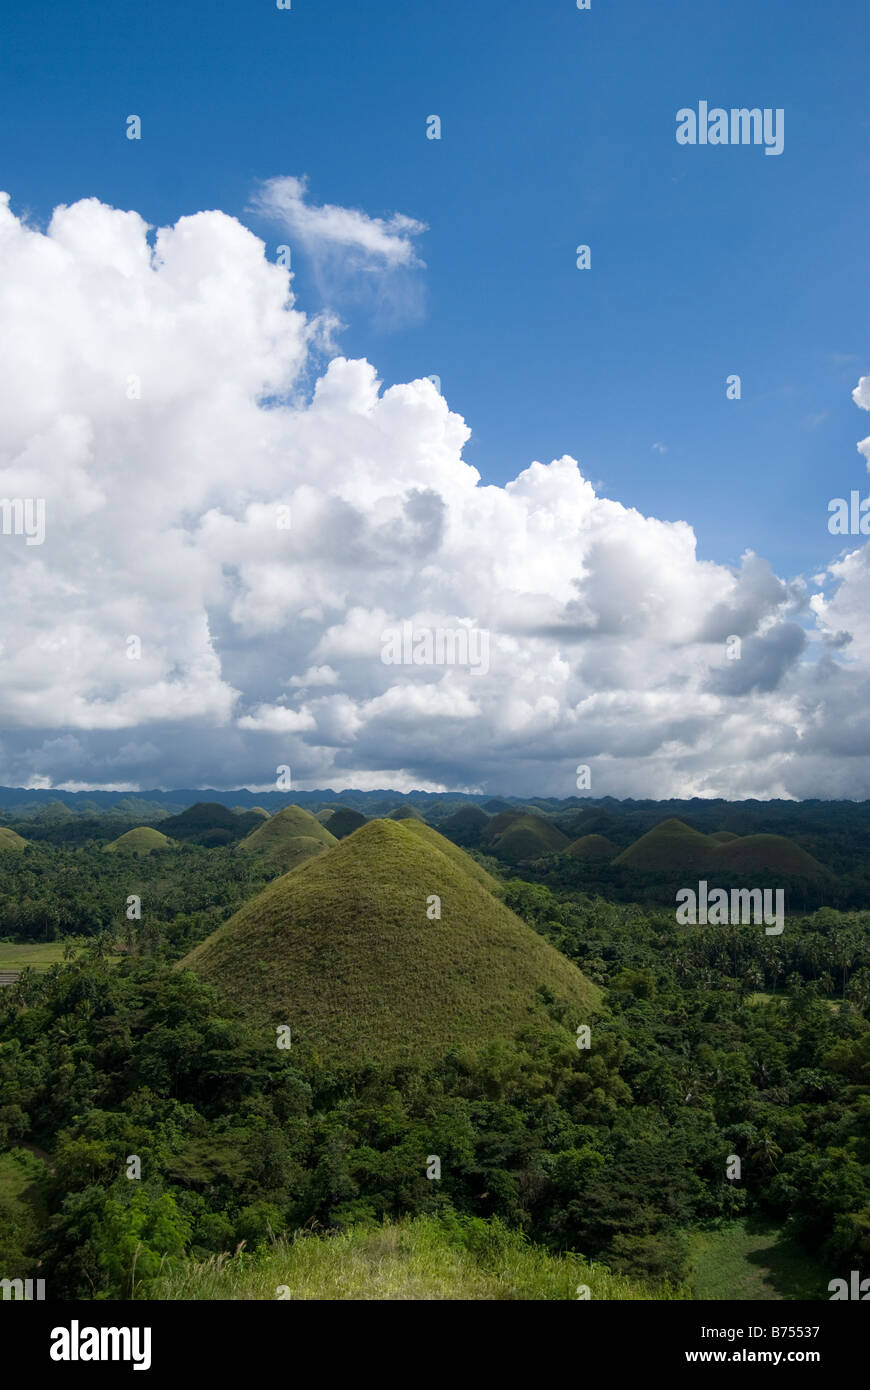 The Chocolate Hills National Geological Monument, Carmen, Bohol, Visayas, Philippines Stock Photo